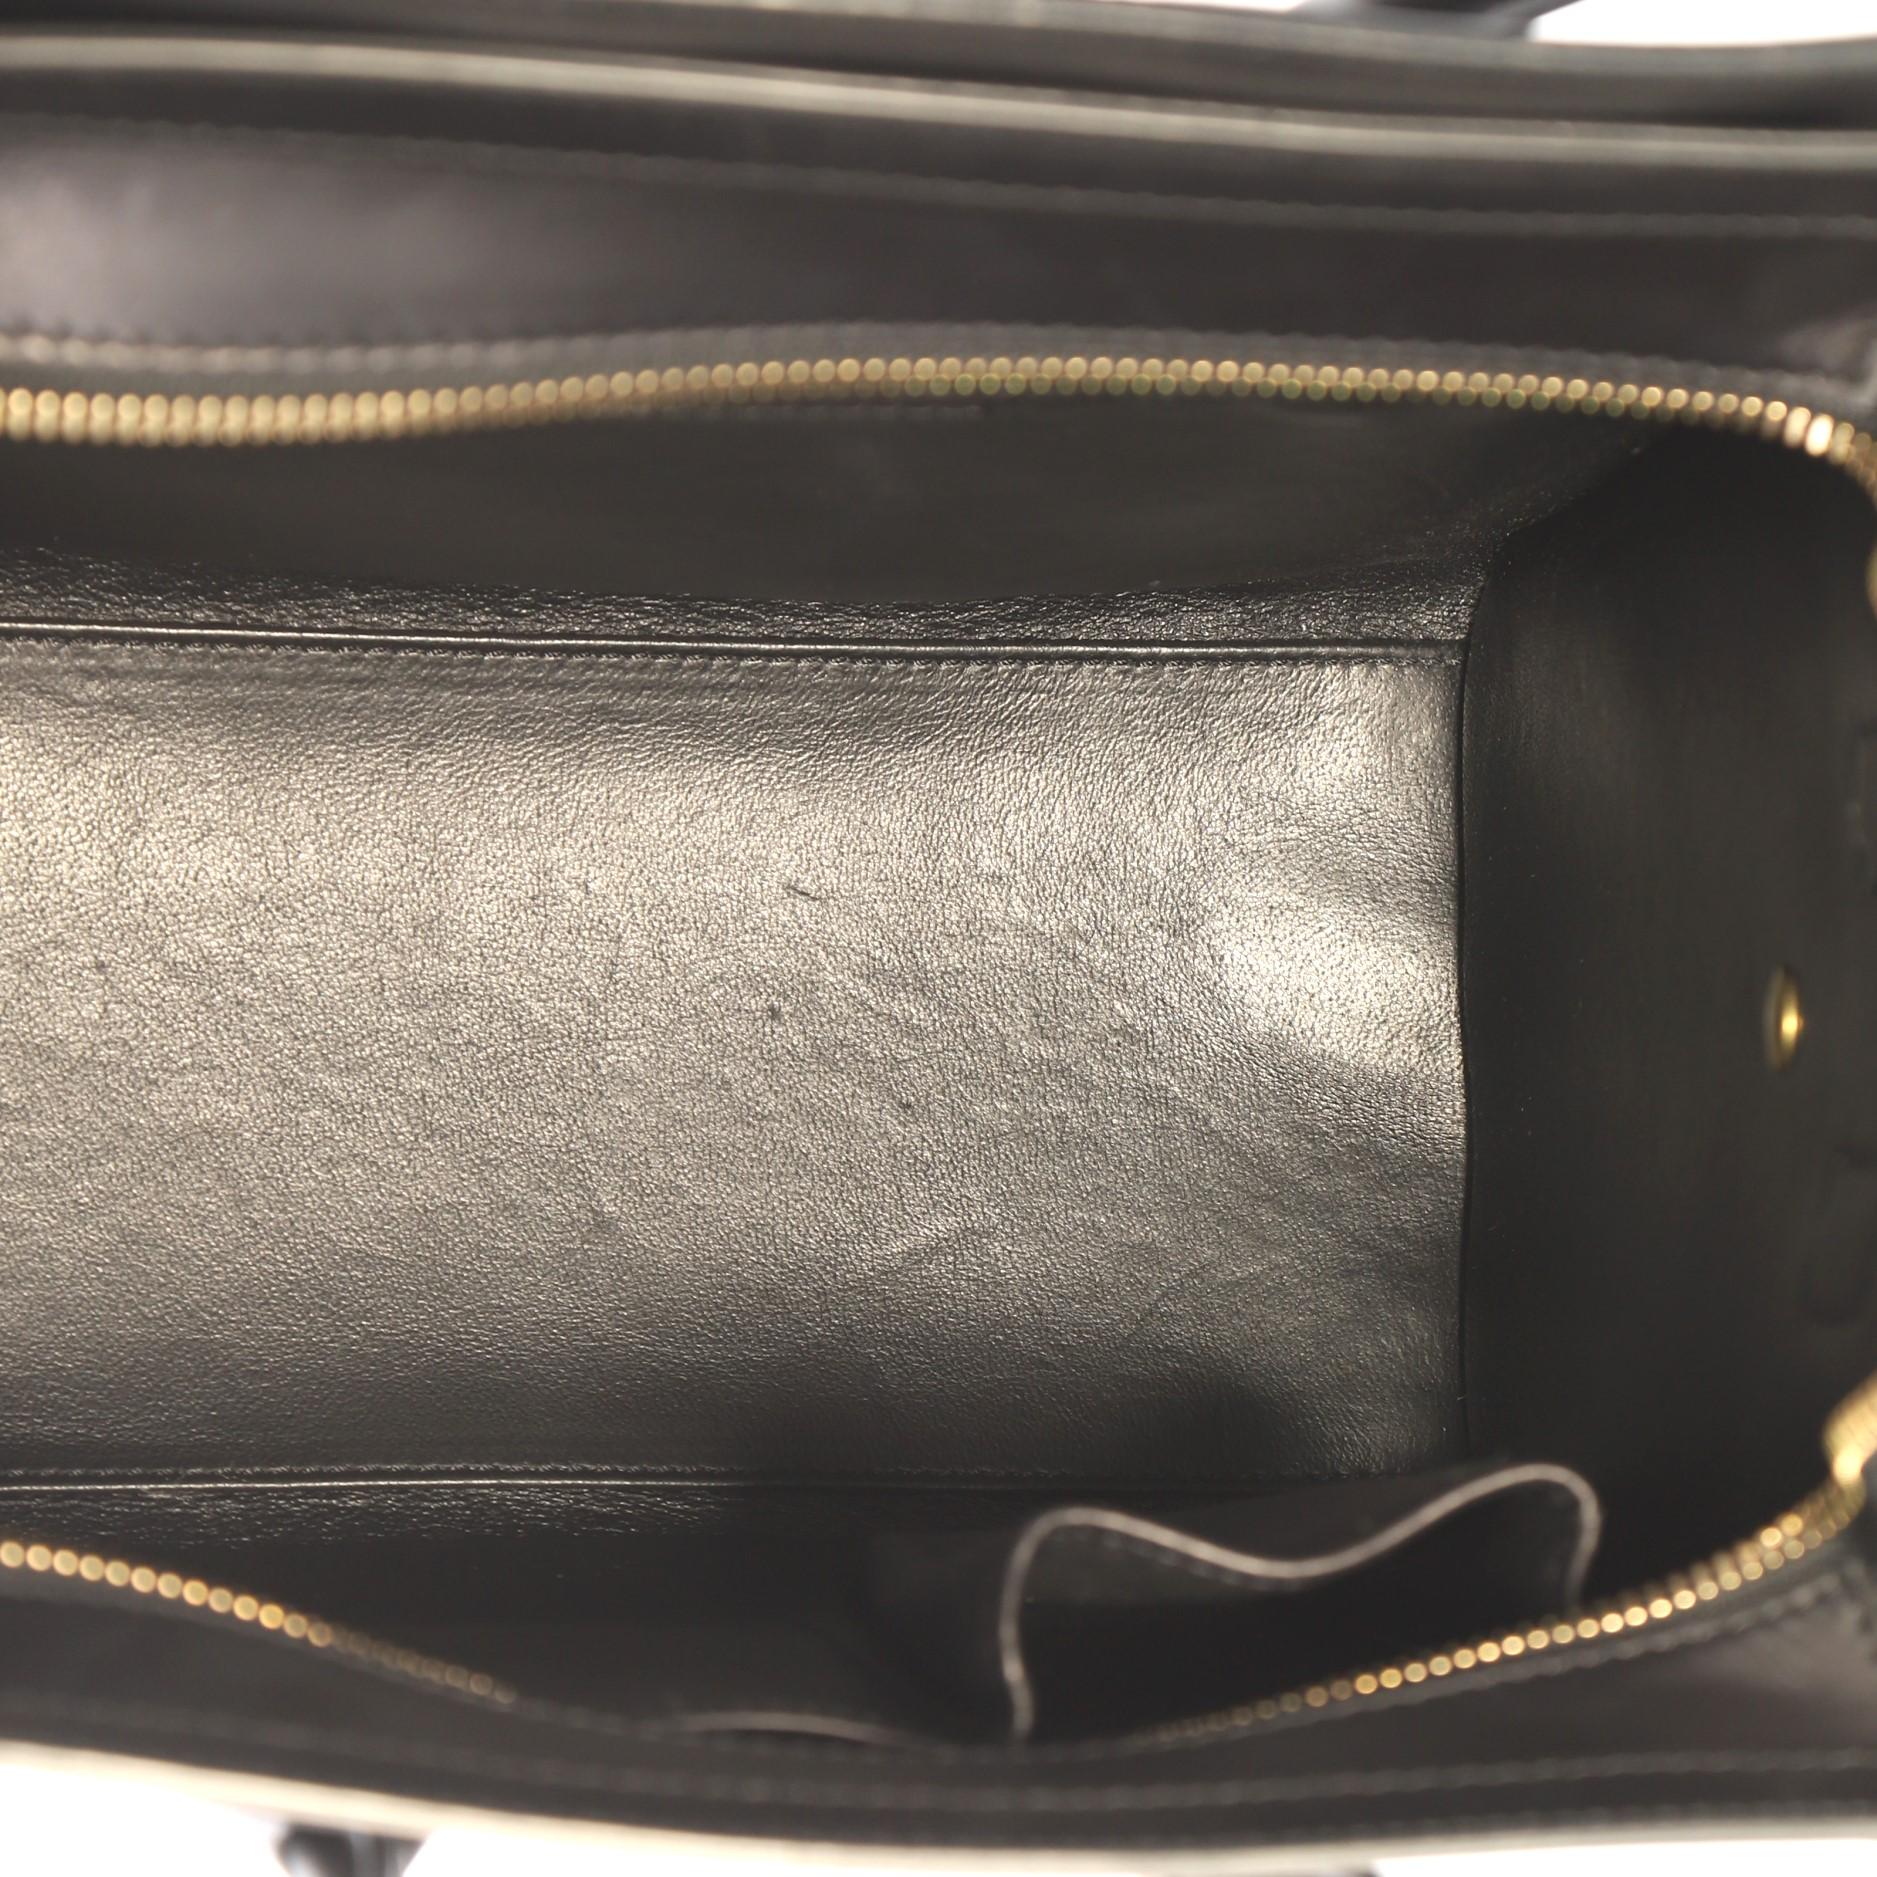 Women's Celine Tricolor Luggage Handbag Leather Micro